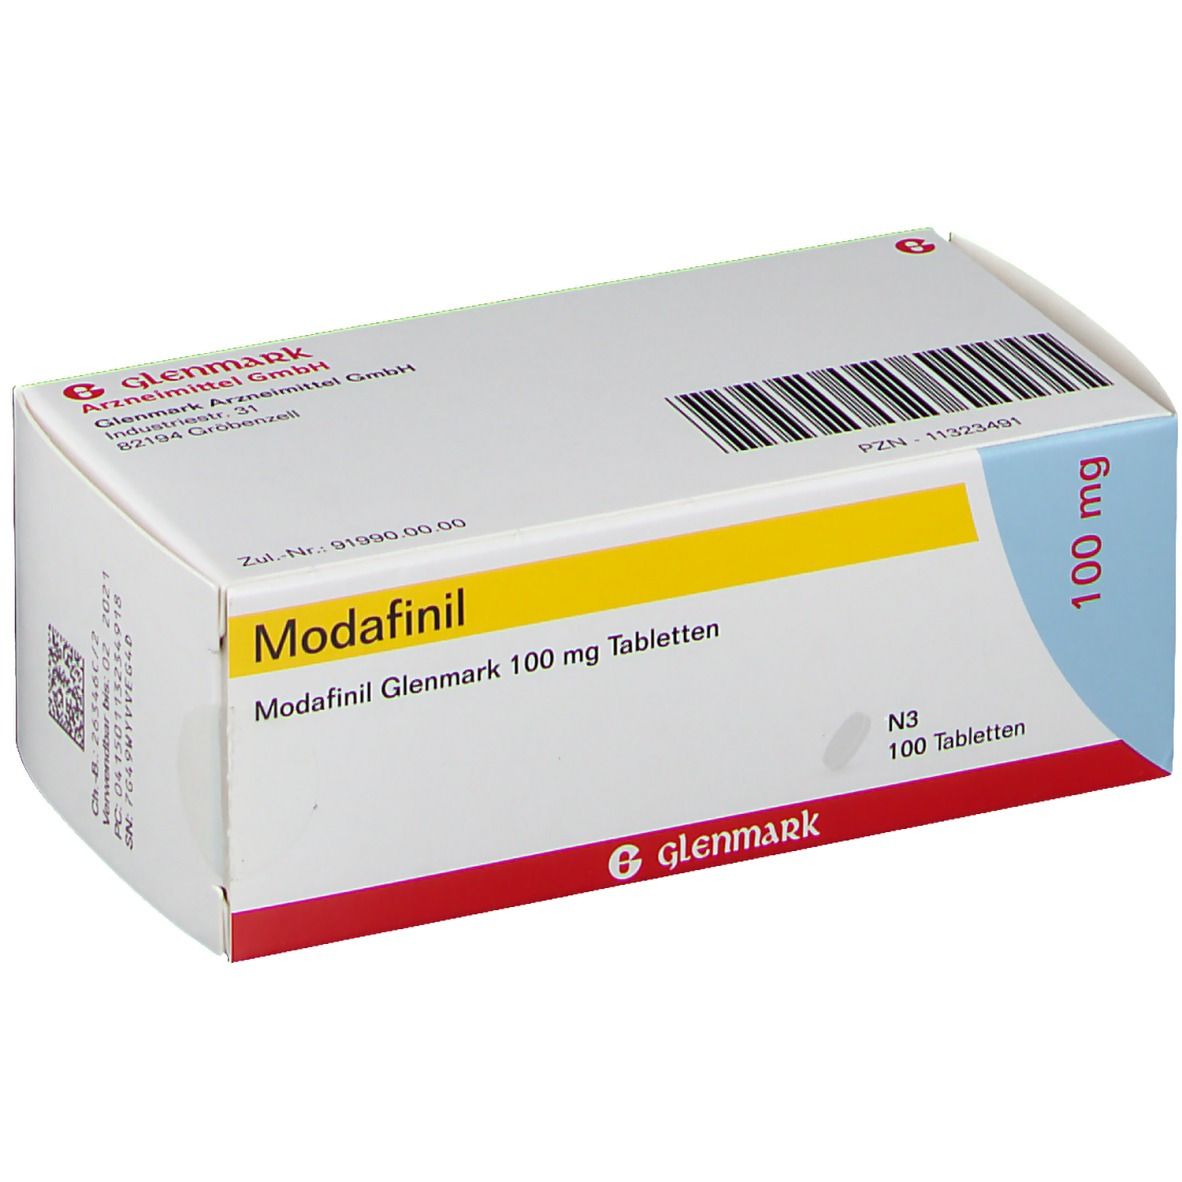 Modafinil Glenmark 100 mg